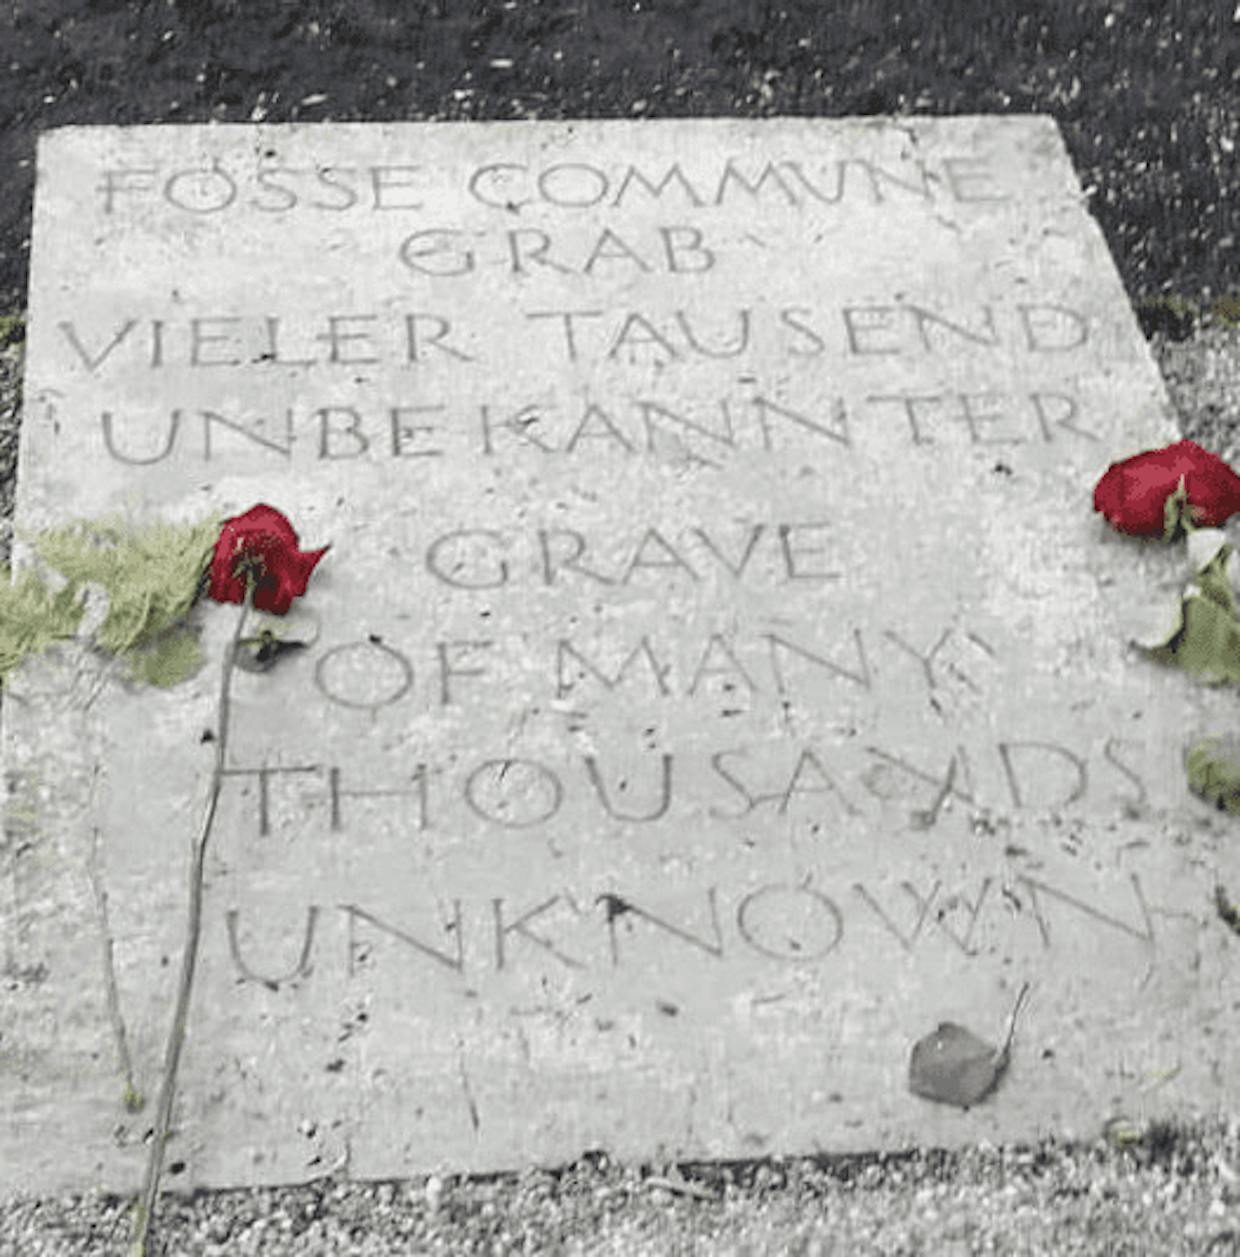 A memorial on the grounds of Dachau, 2019 (Photo by Katharhynn Heidelberg)